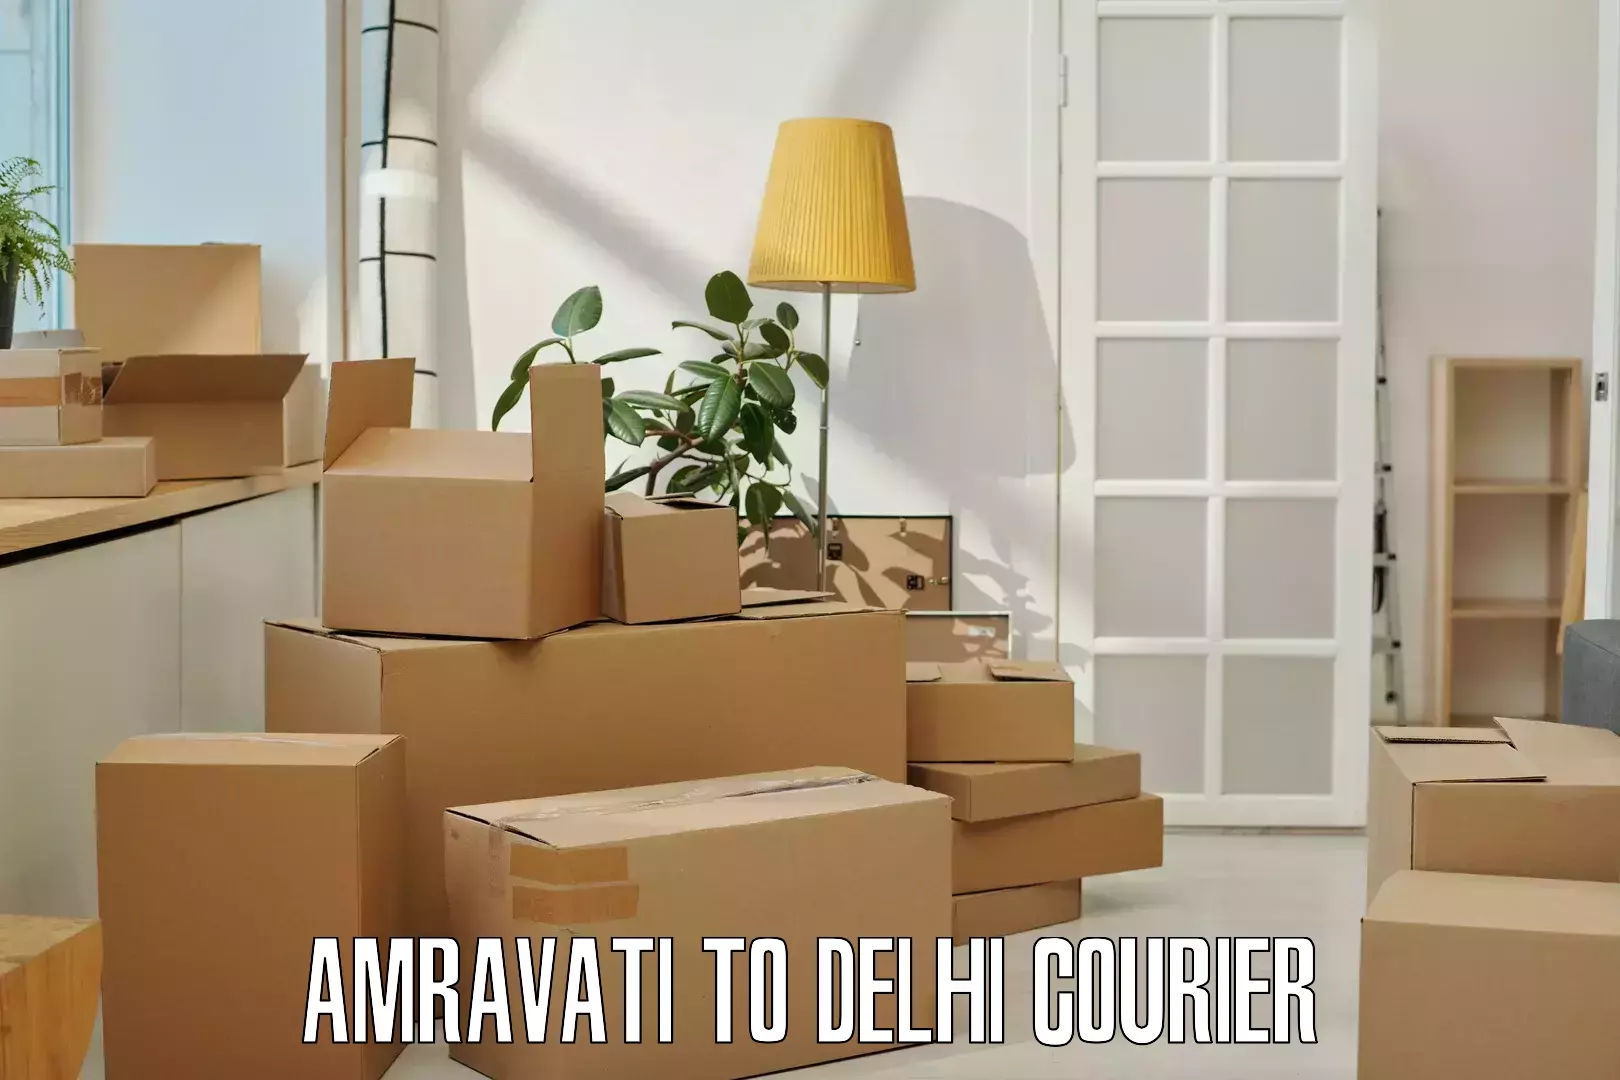 Urgent courier needs Amravati to NCR